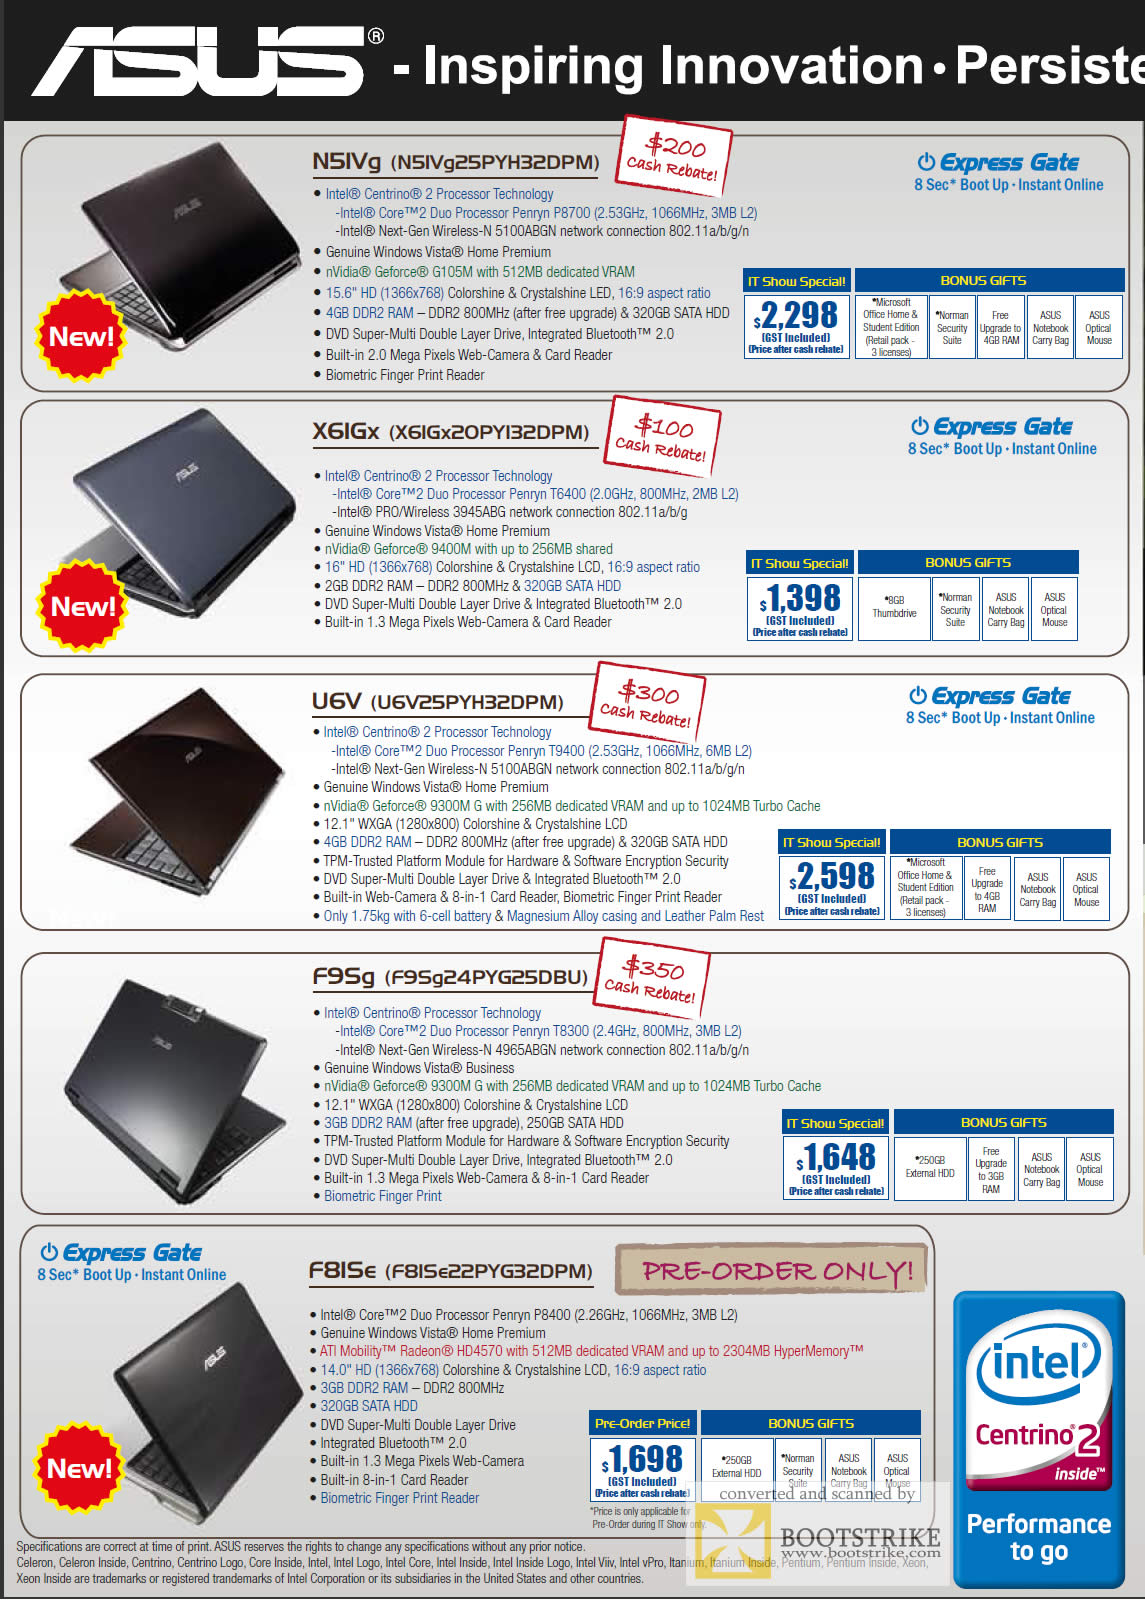 ASUS Laptops 2 IT SHOW 2009 Price List Brochure Flyer Image